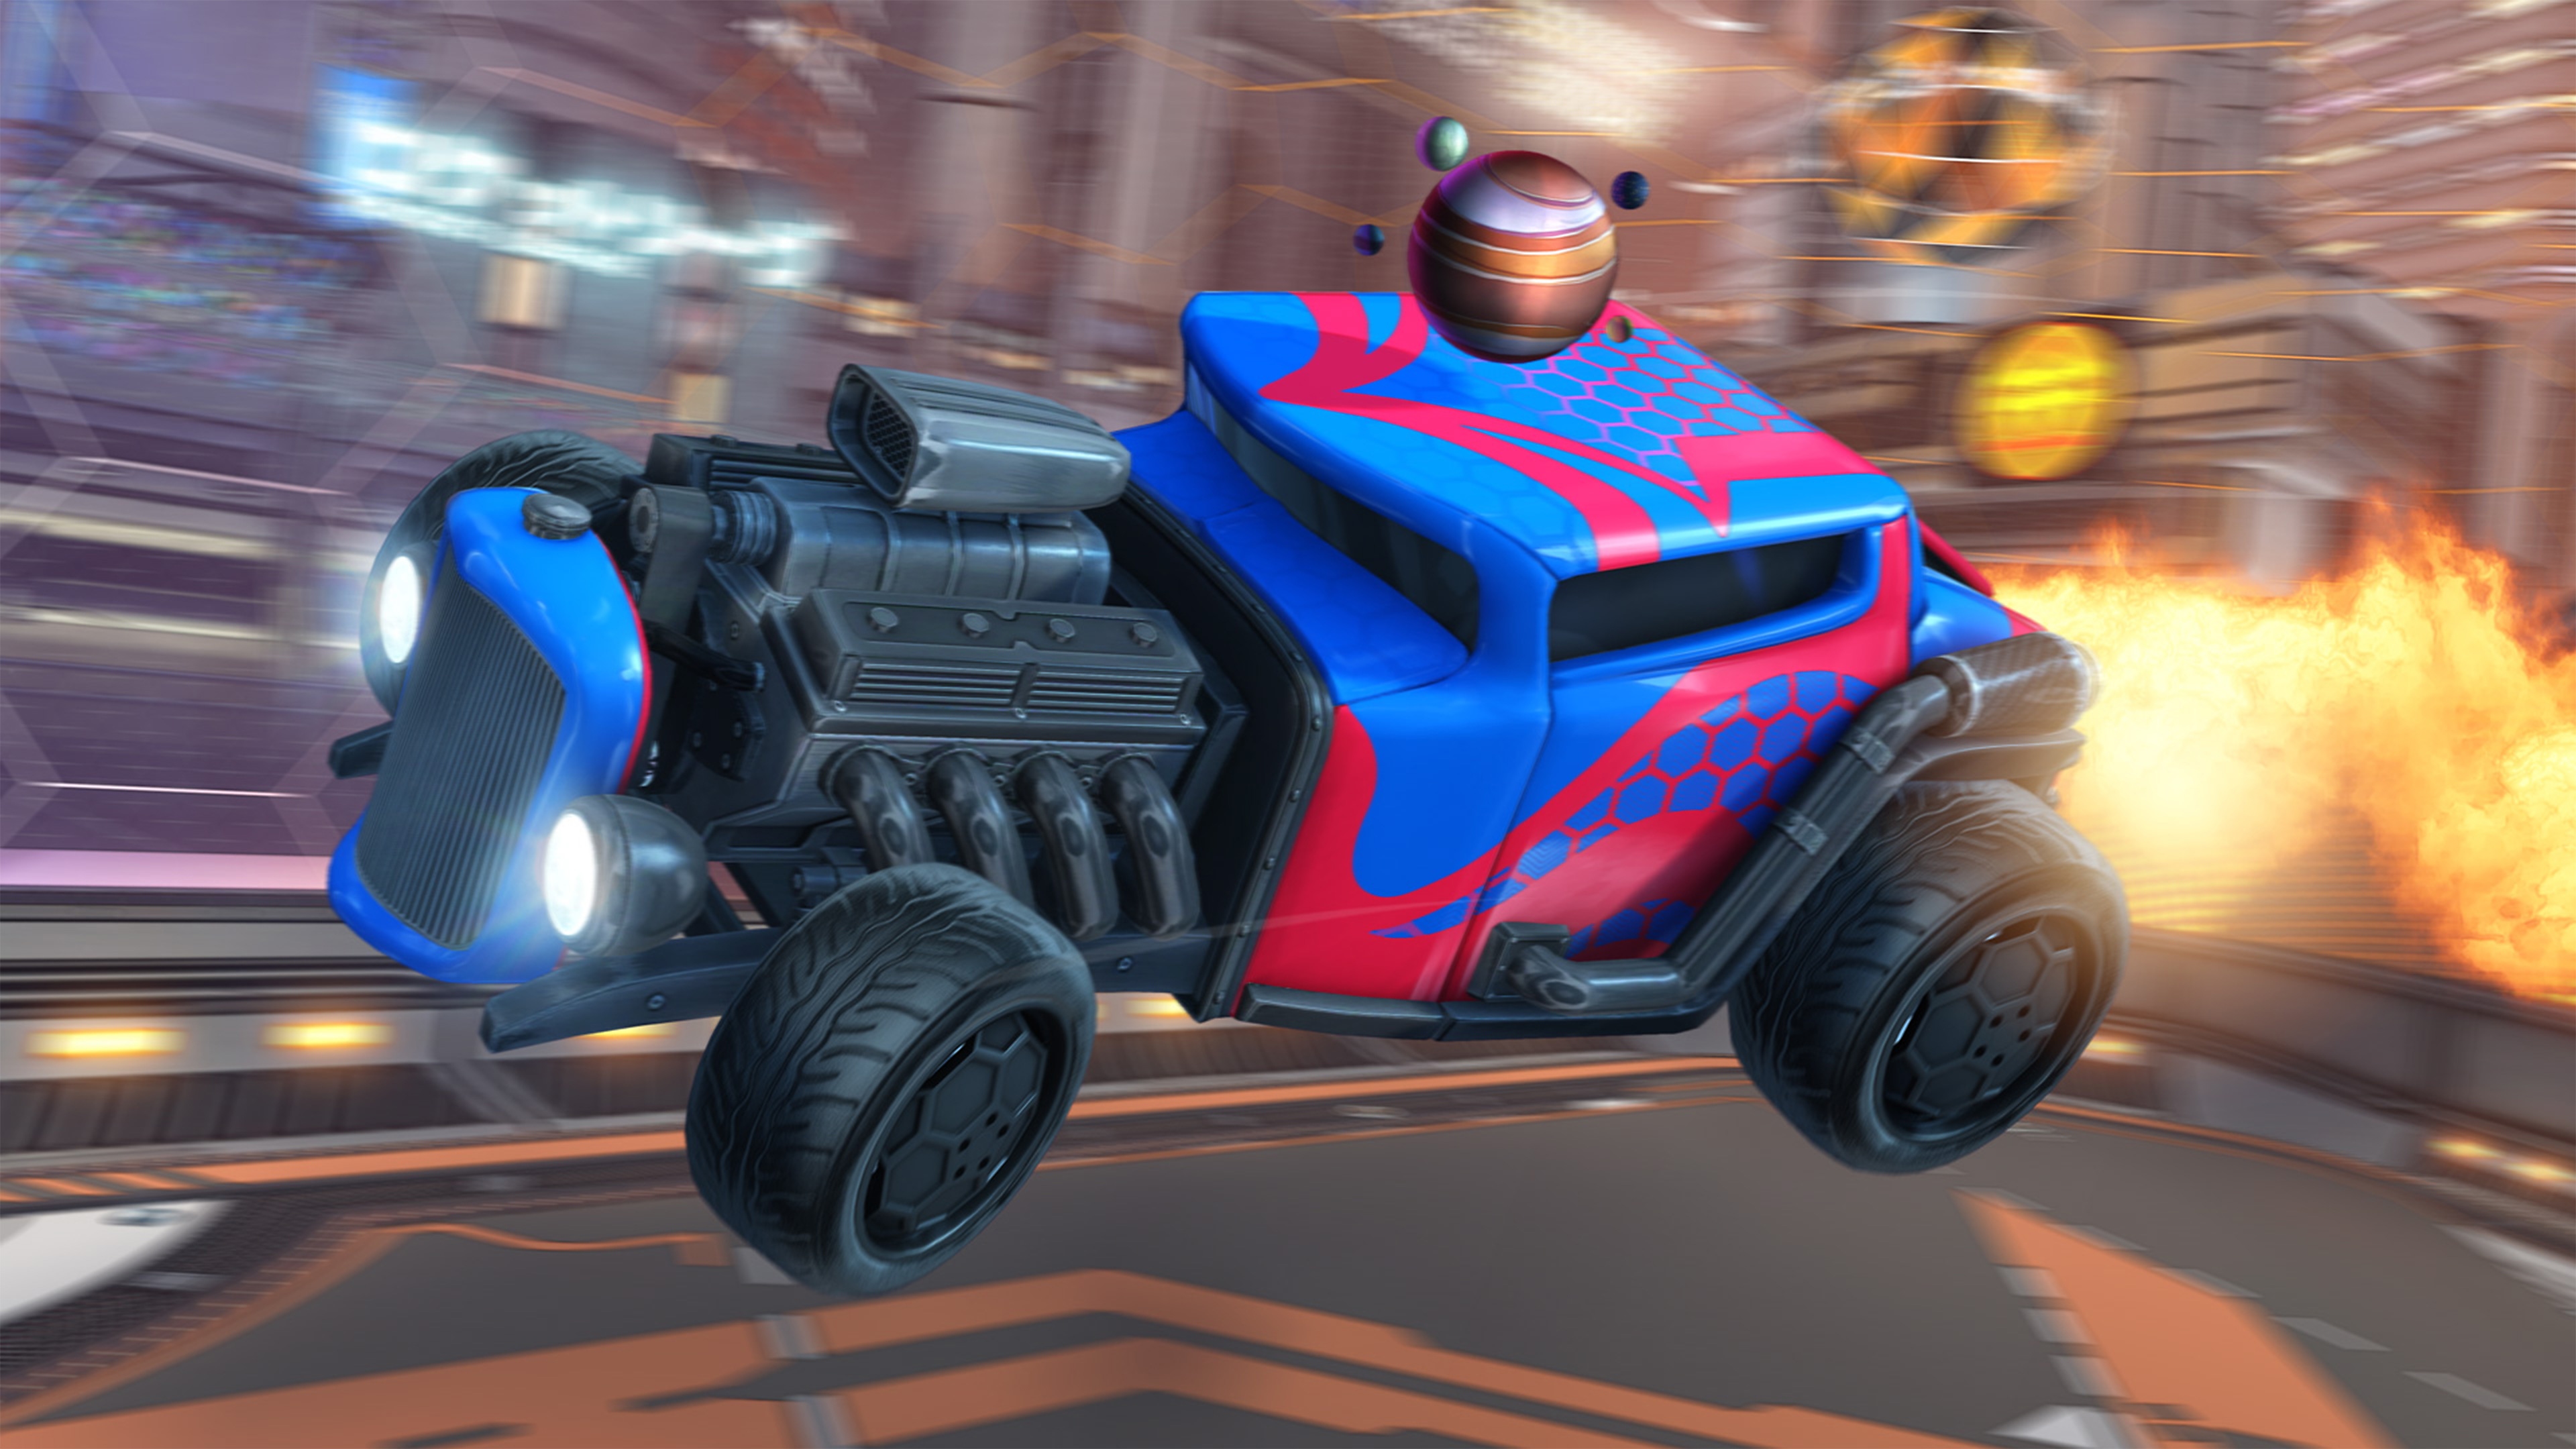 Rocket League snimak ekrana koji prikazuje automobil u stilu hot-roda sa otvorenim motorom i crvenom i plavom bojom